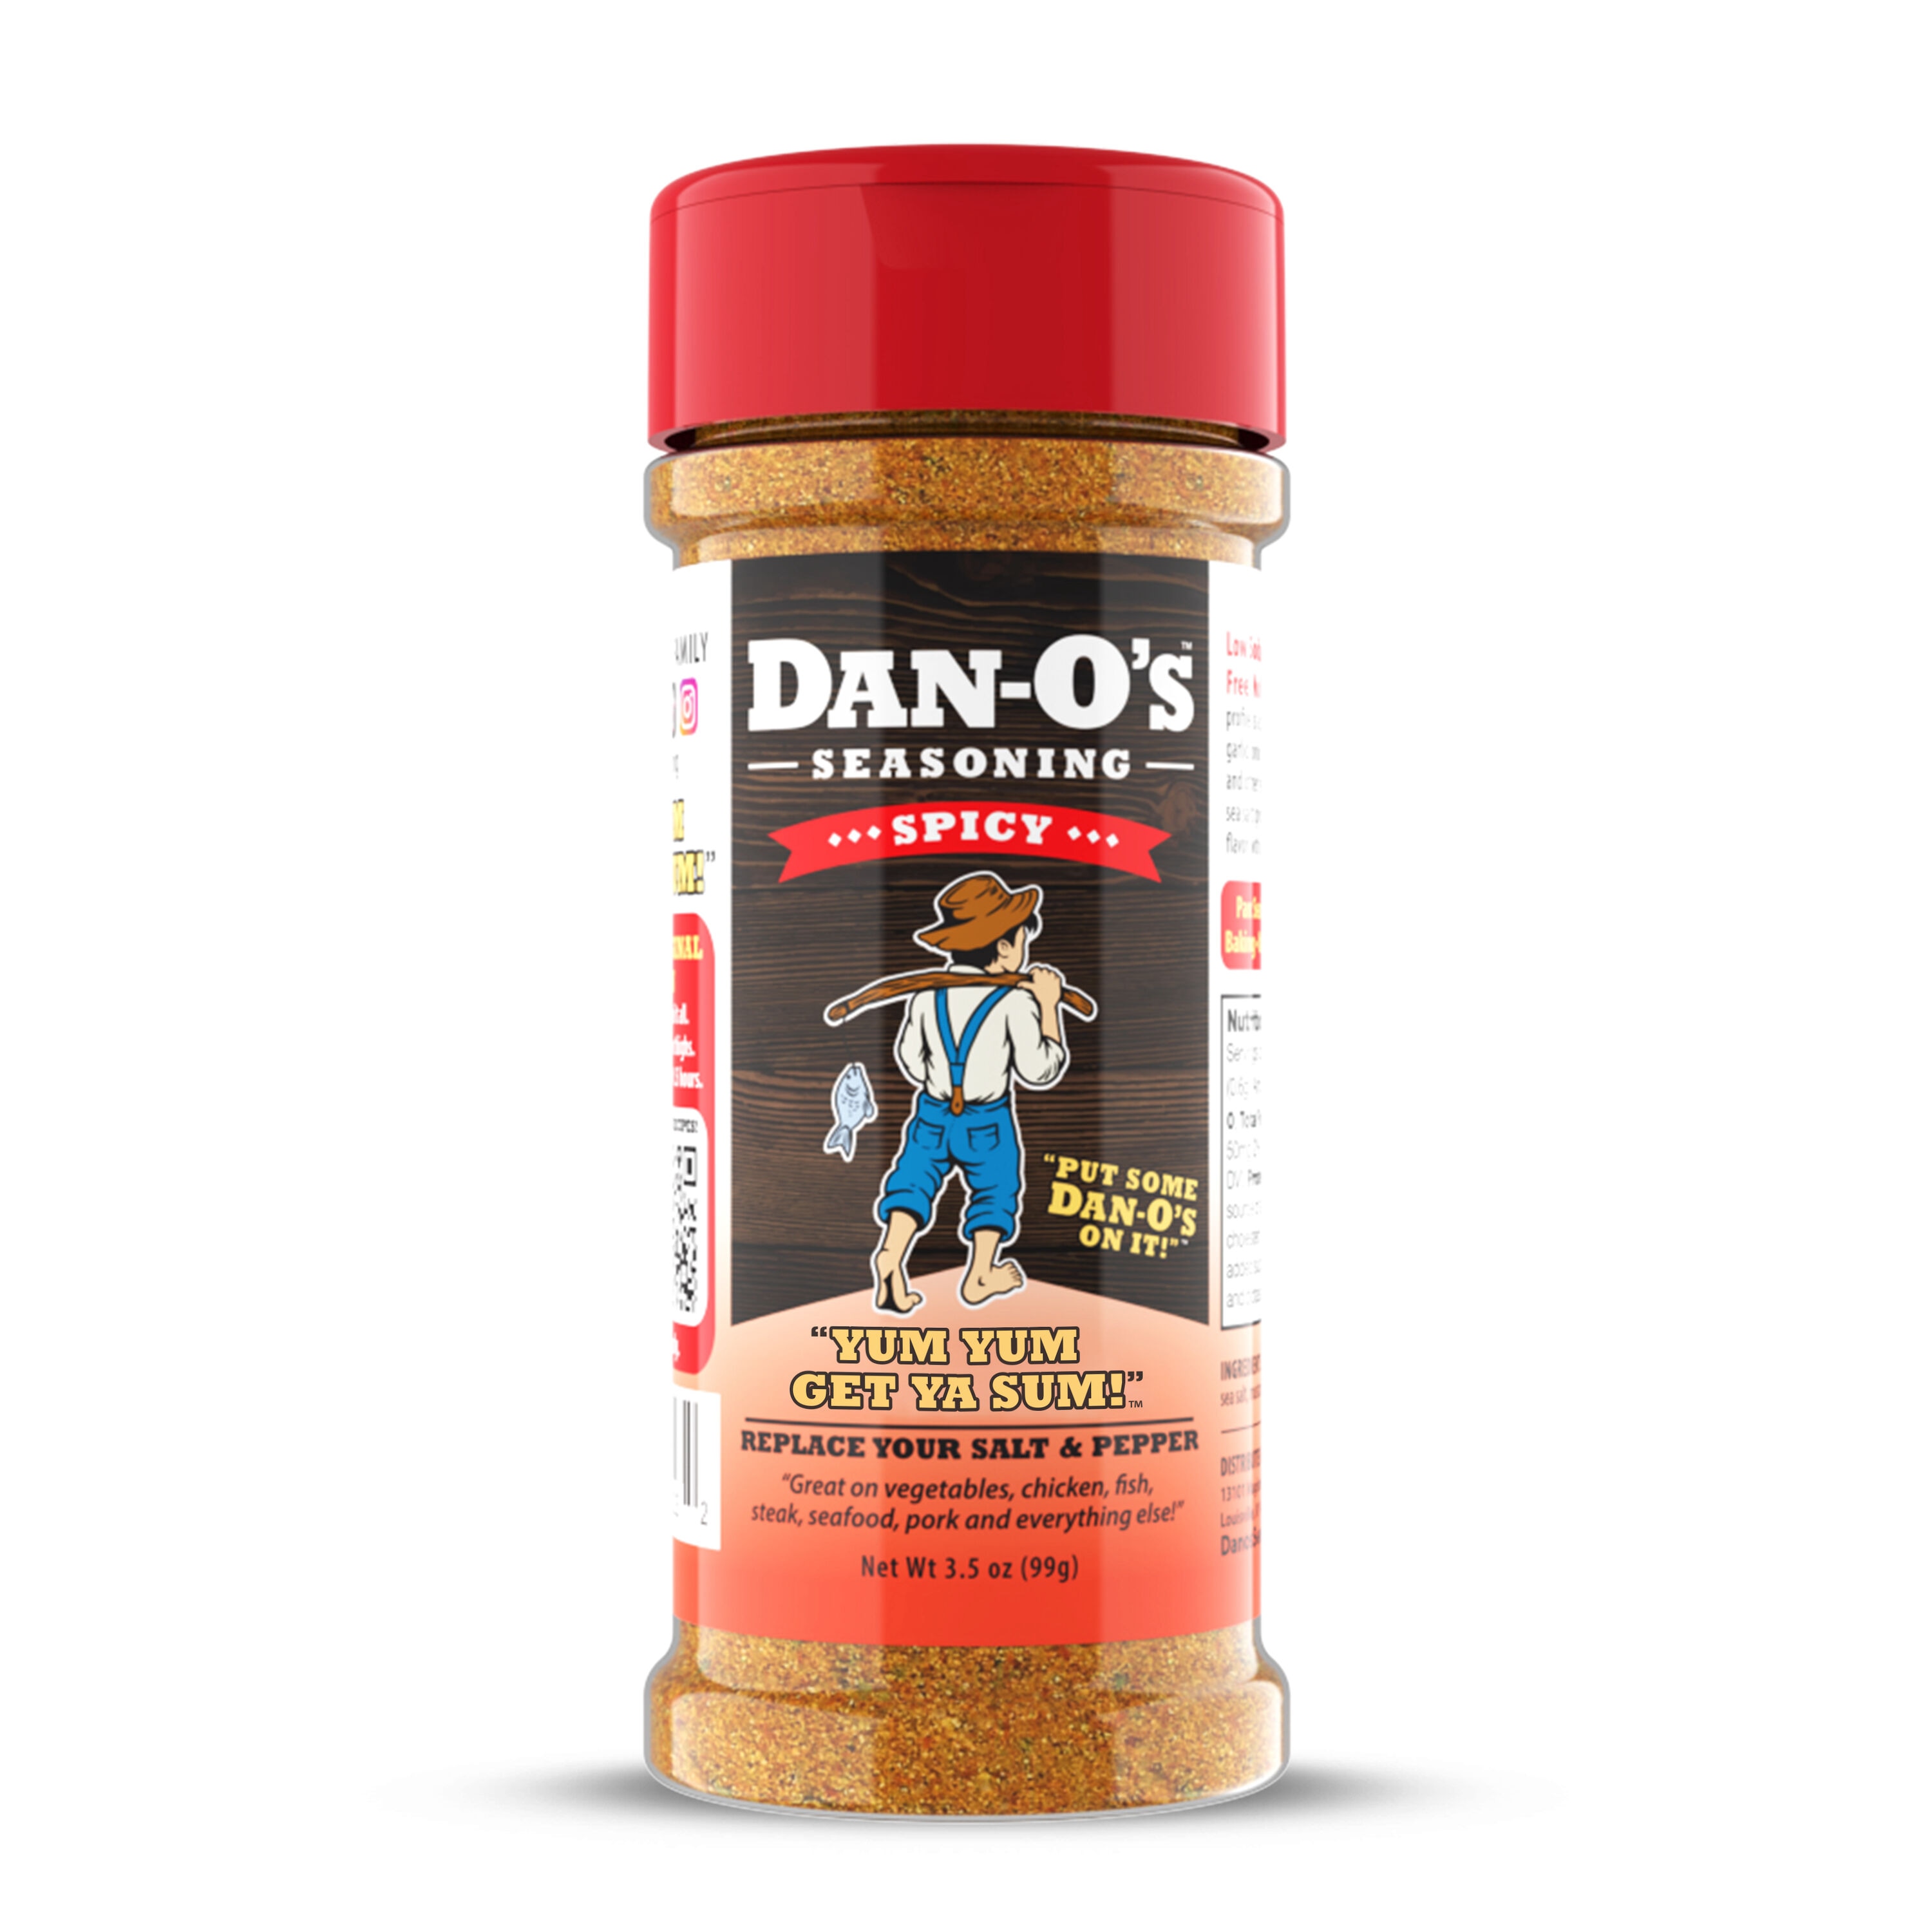 DAN-O's Seasoning 3 Pack Box